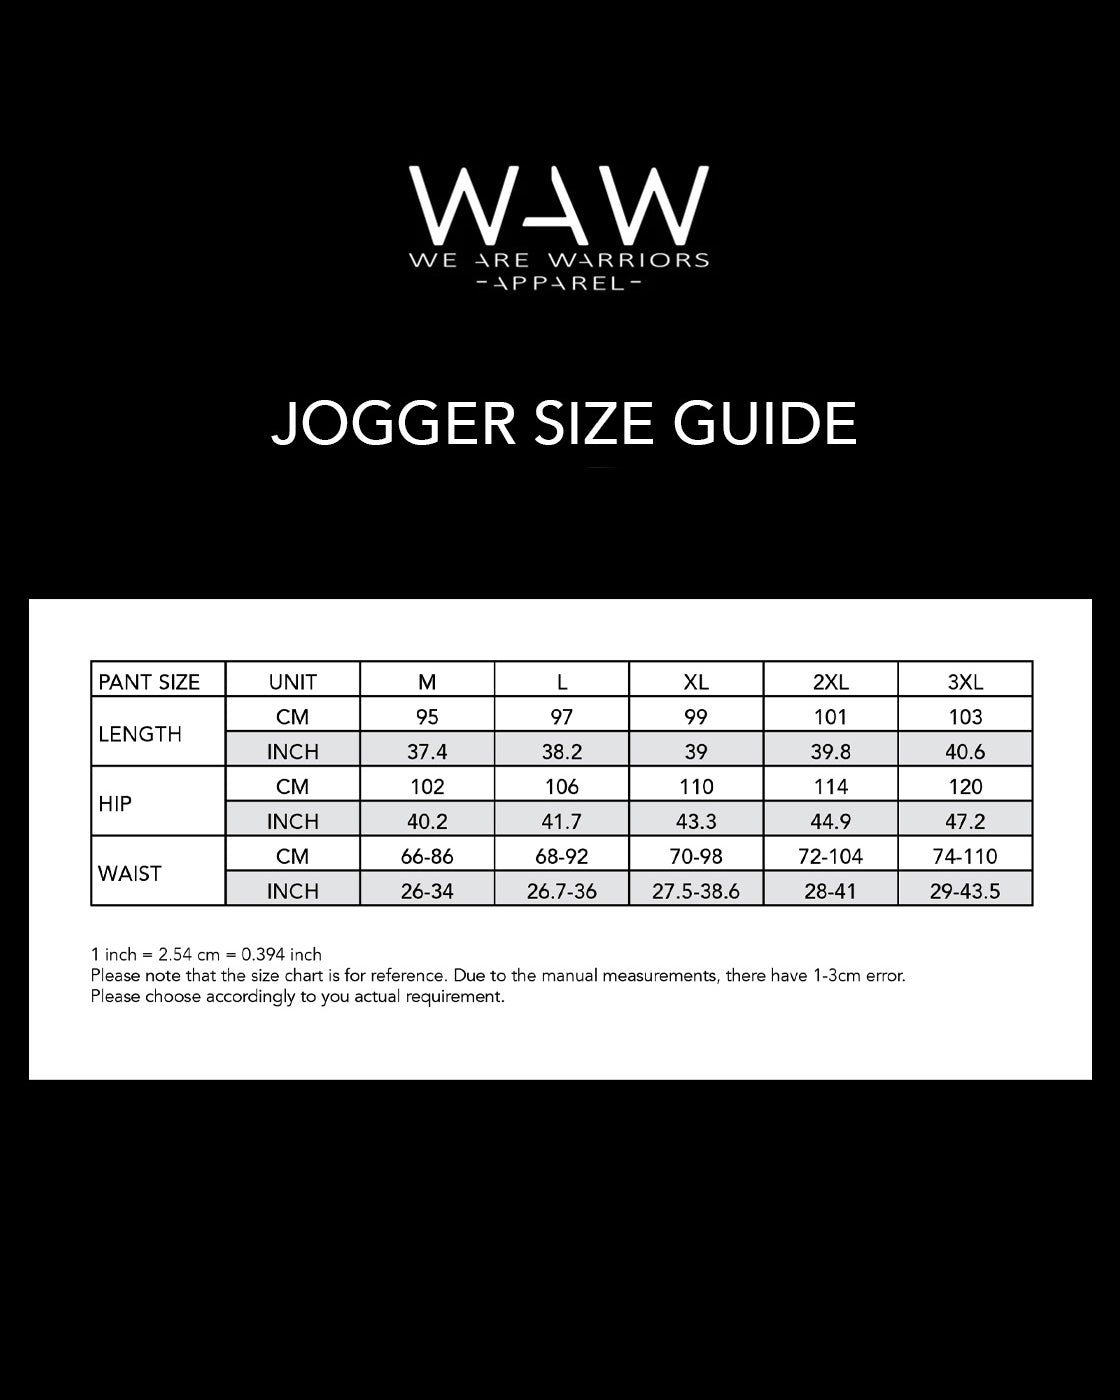 We Are Warriors Apparel Jogger Size Guide, wearewarriorsapparel.com